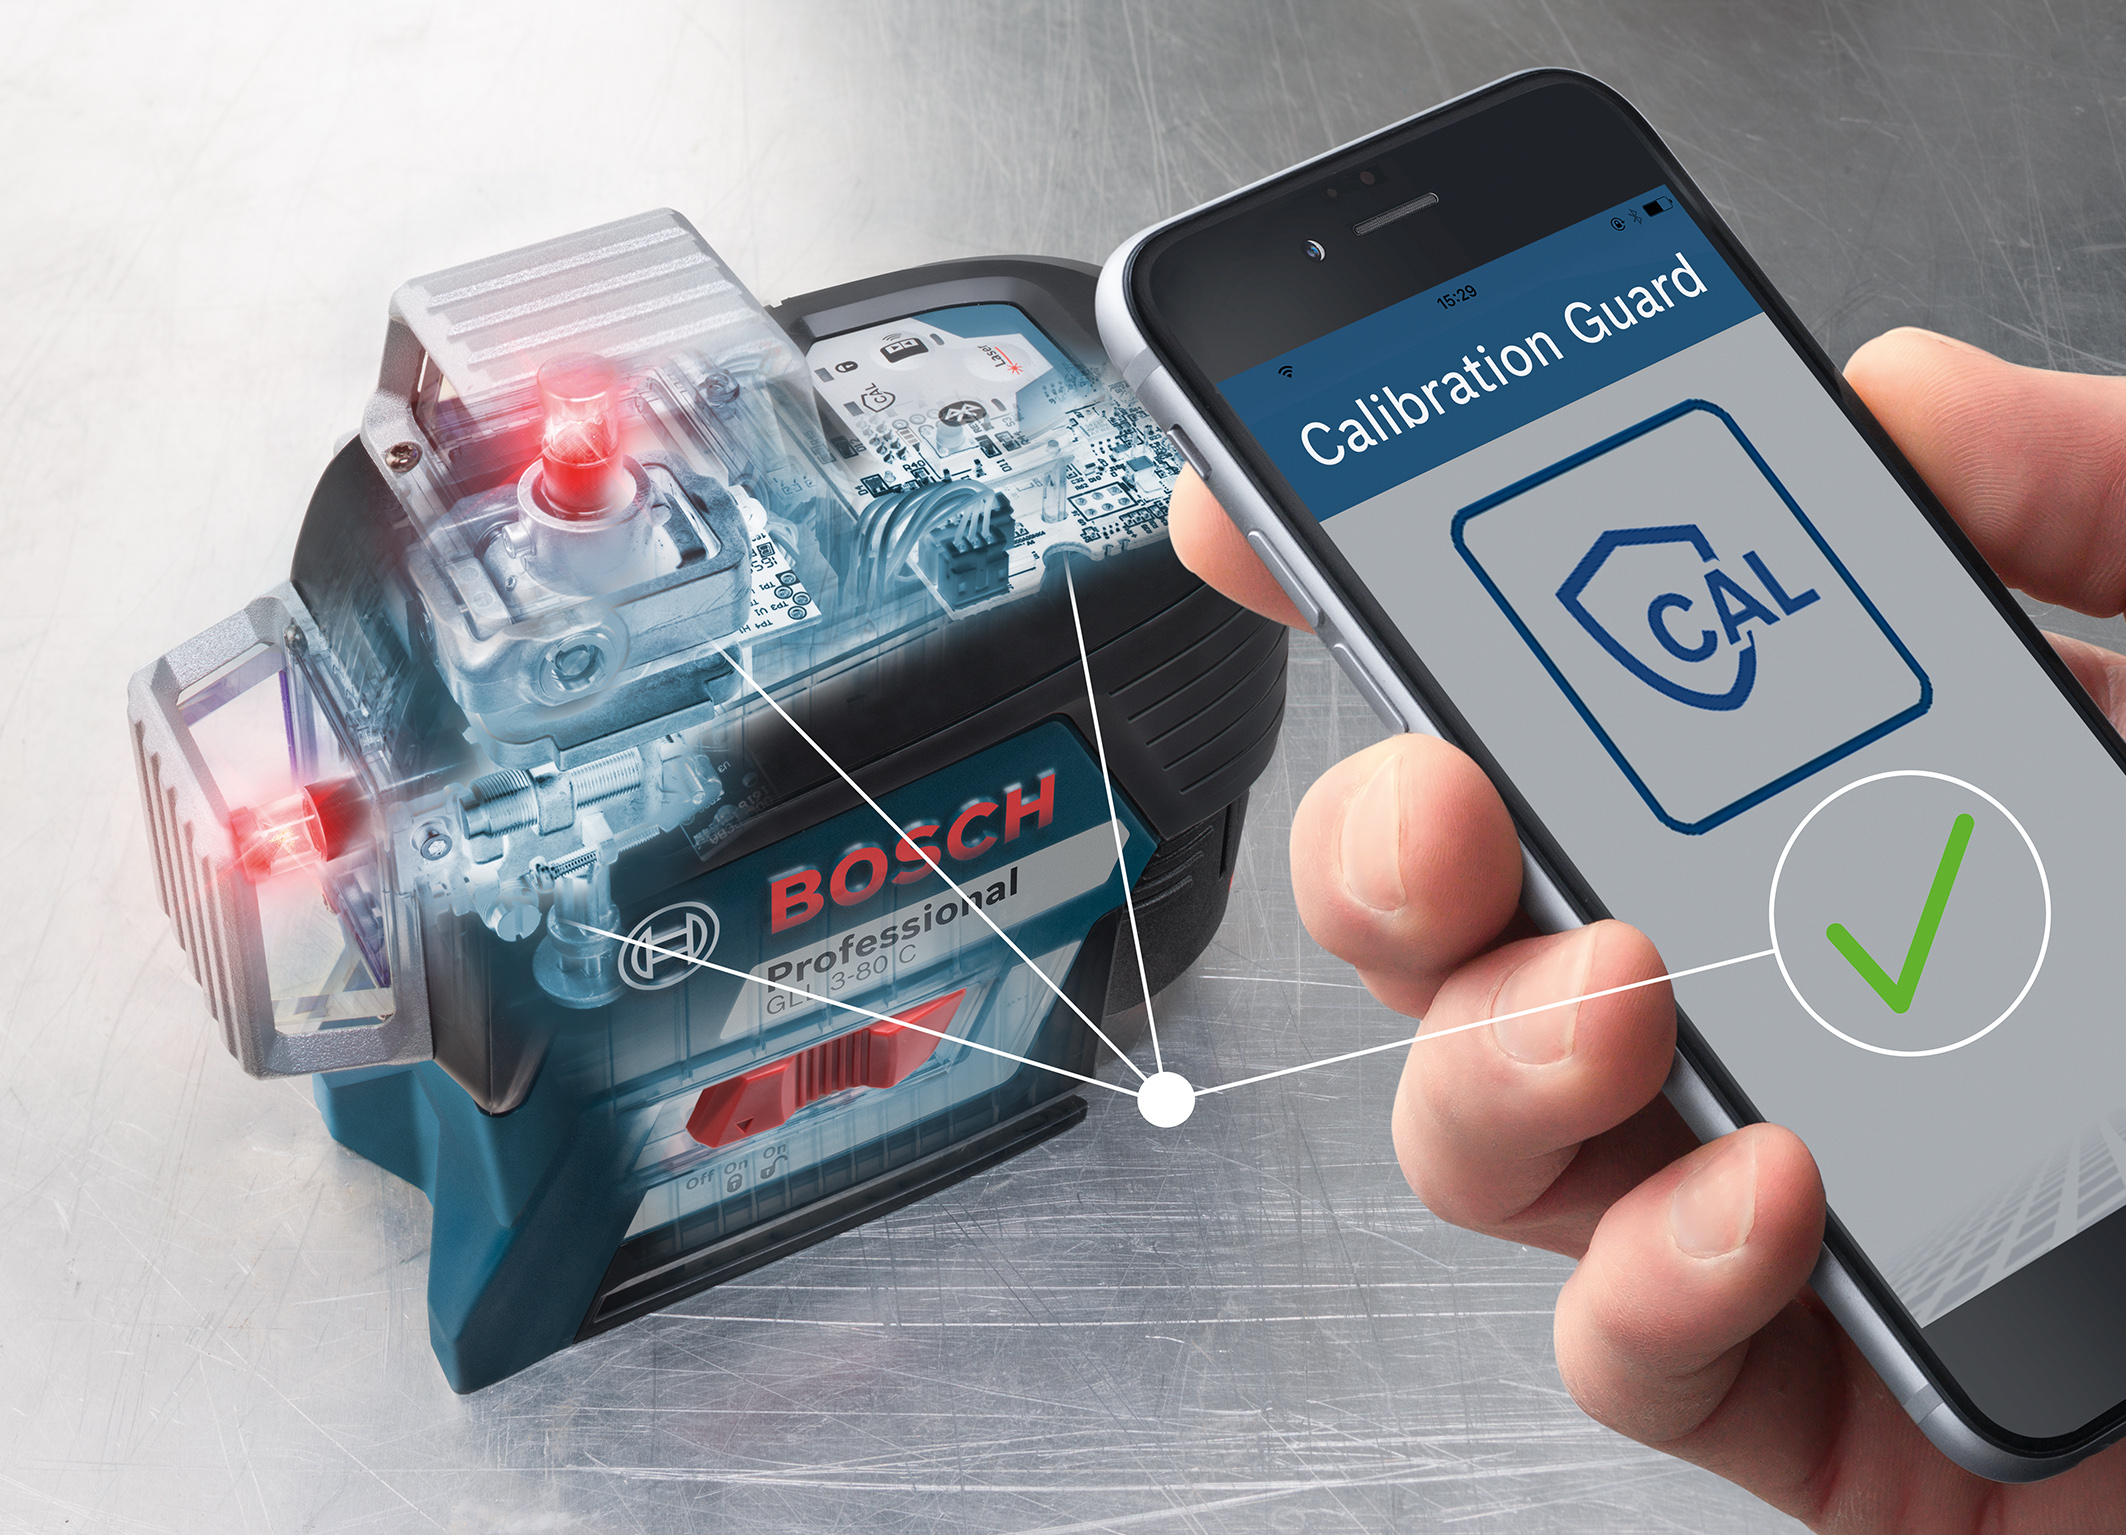 Bosch sensors monitor calibration: New generation of professional Bosch line lasers 